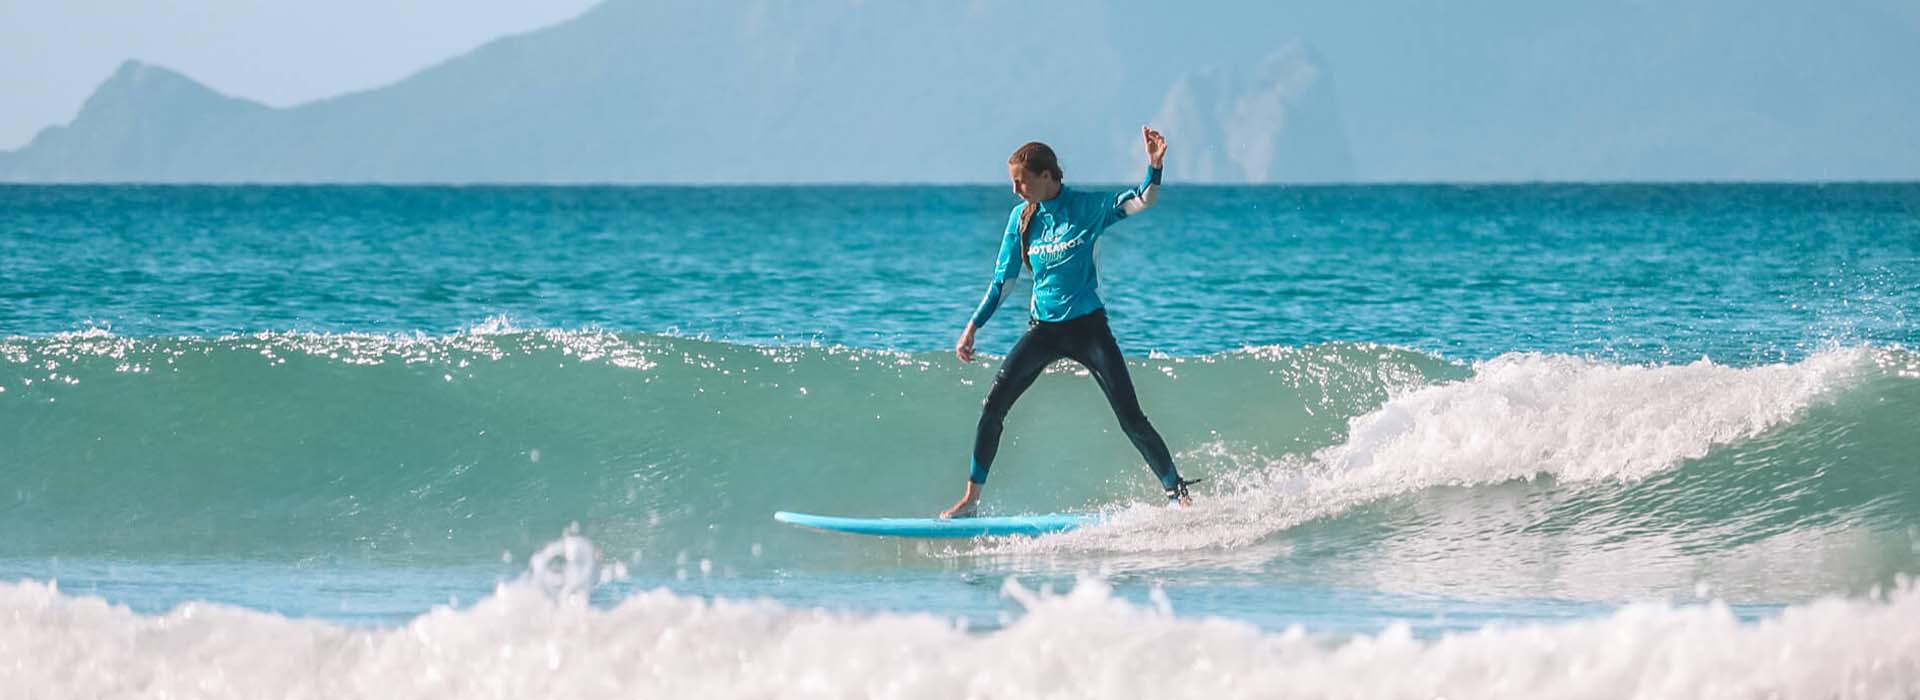 Surfing New Zealand: 